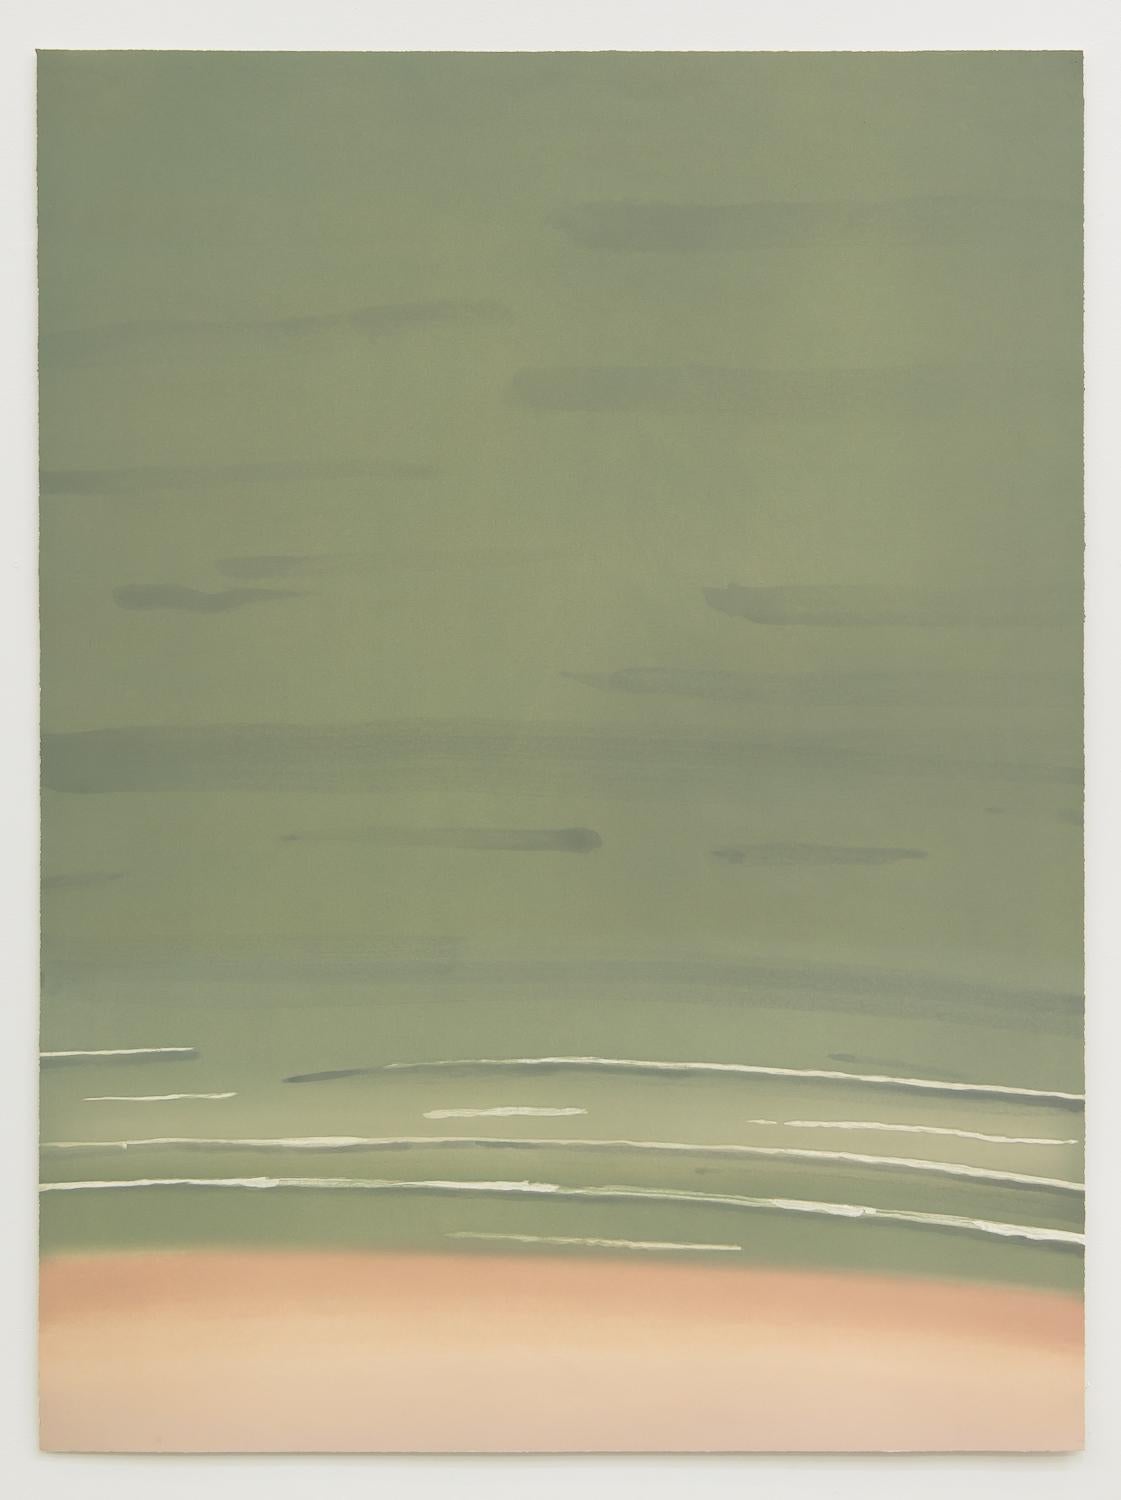 1994, color aquatint, 48 x 36 inches, edition of 40